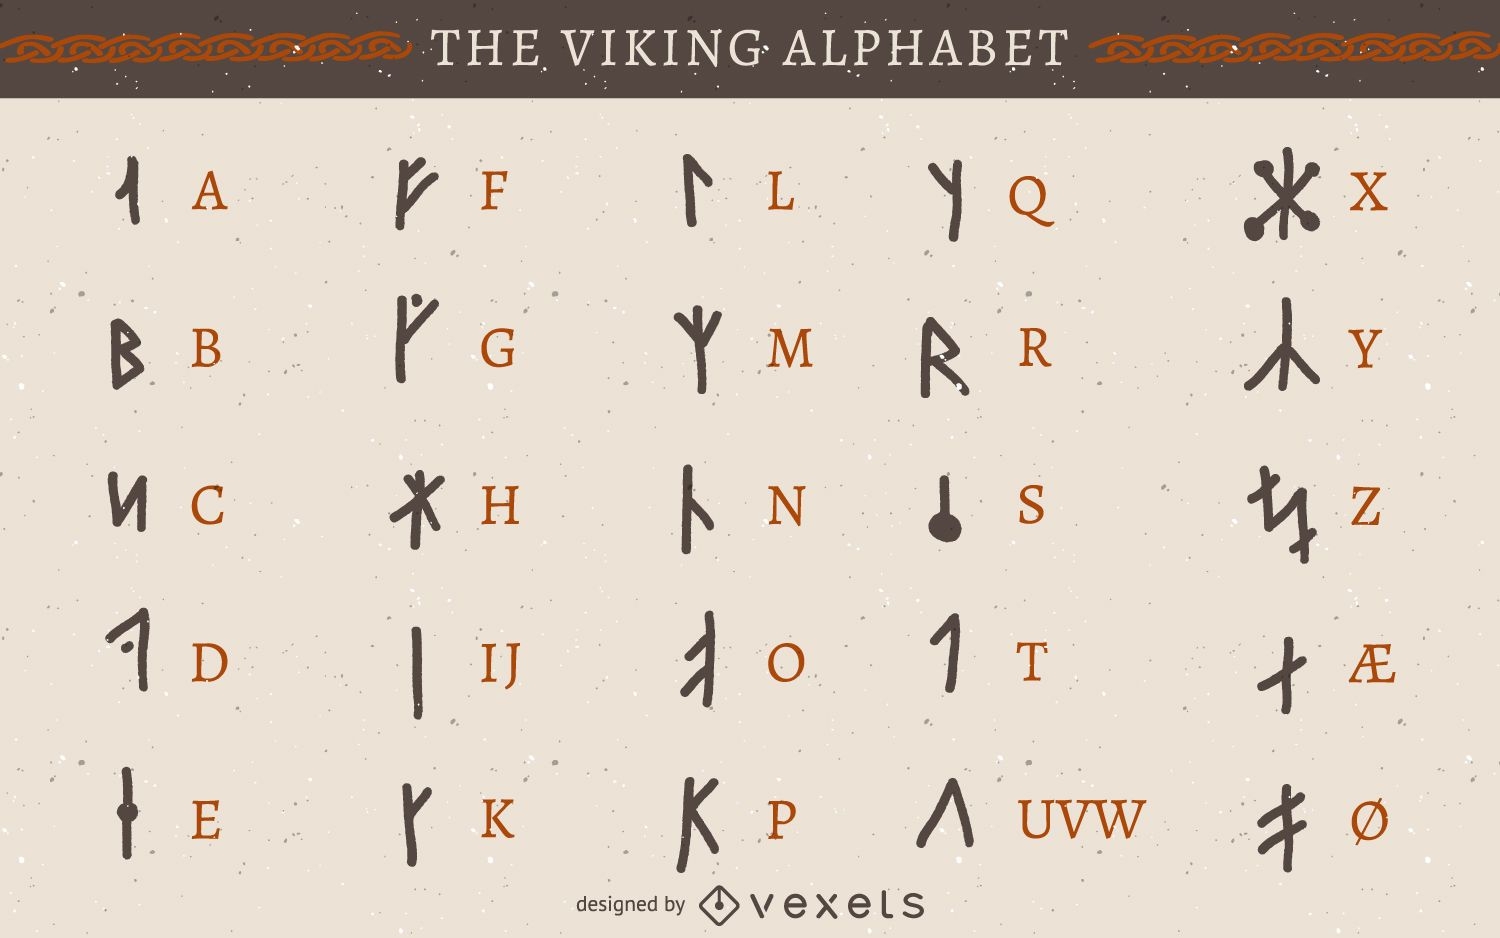 Alfabeto r?nico viking